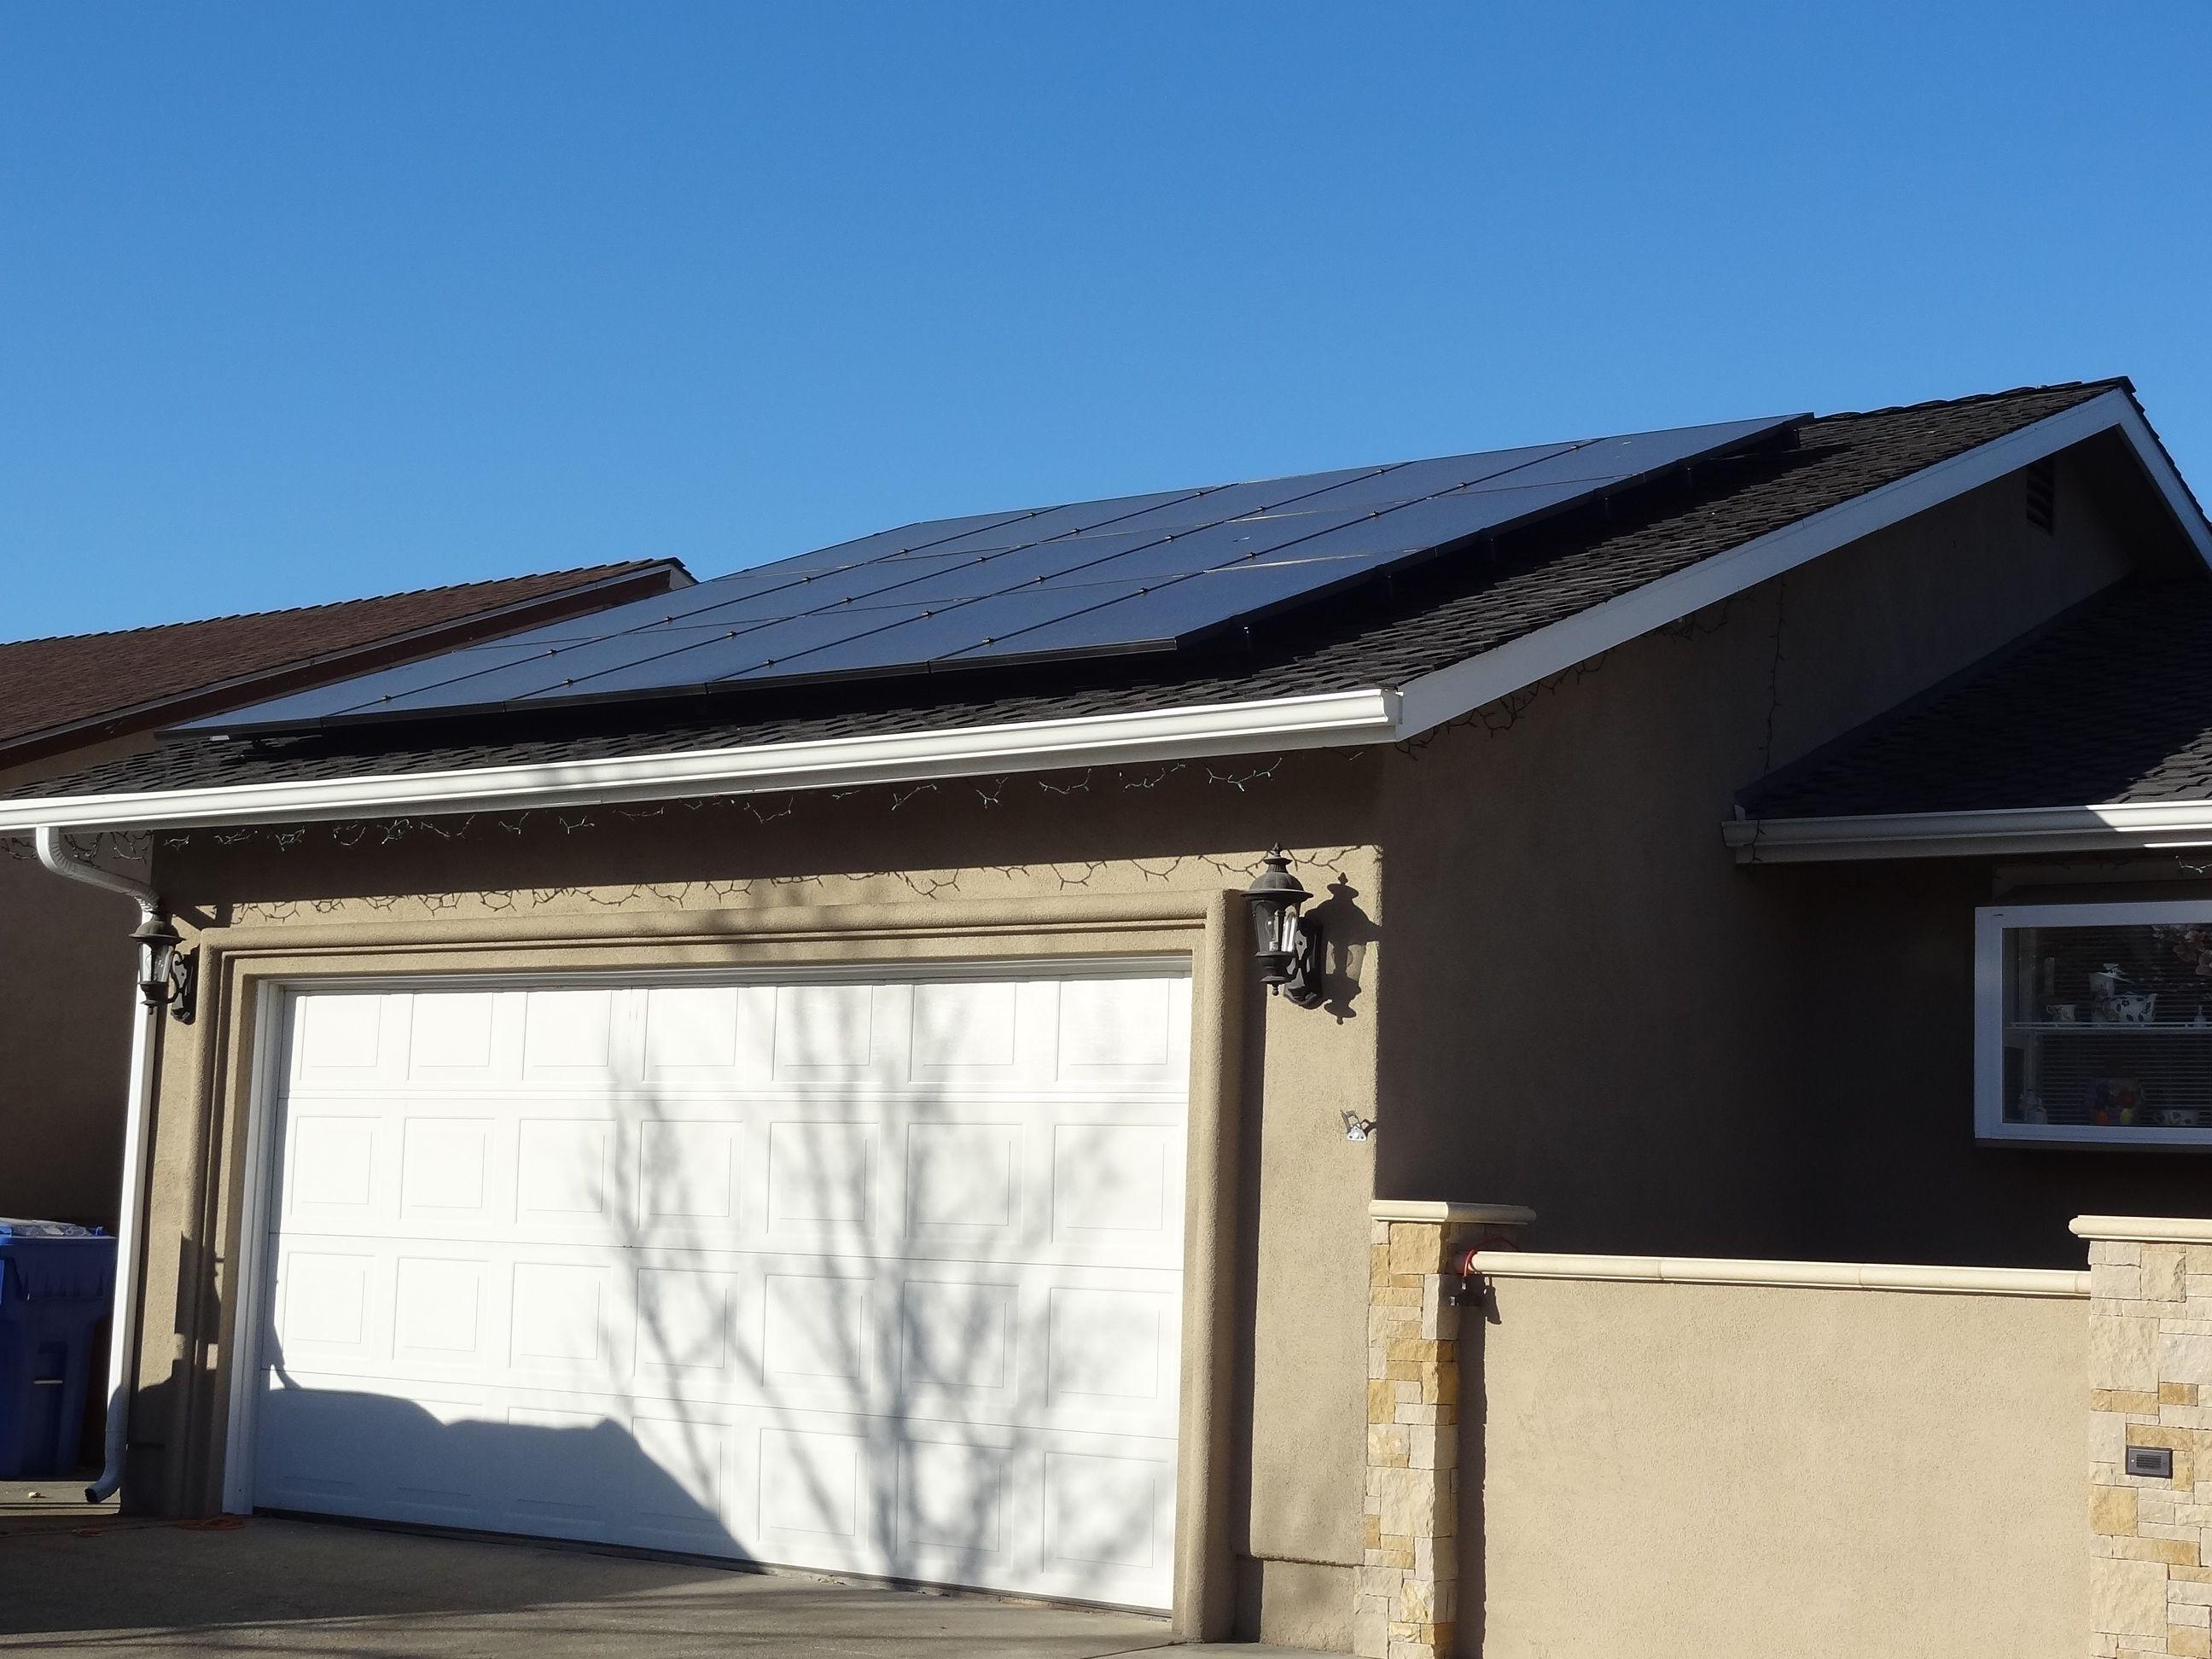 Solar panels installed on single family home